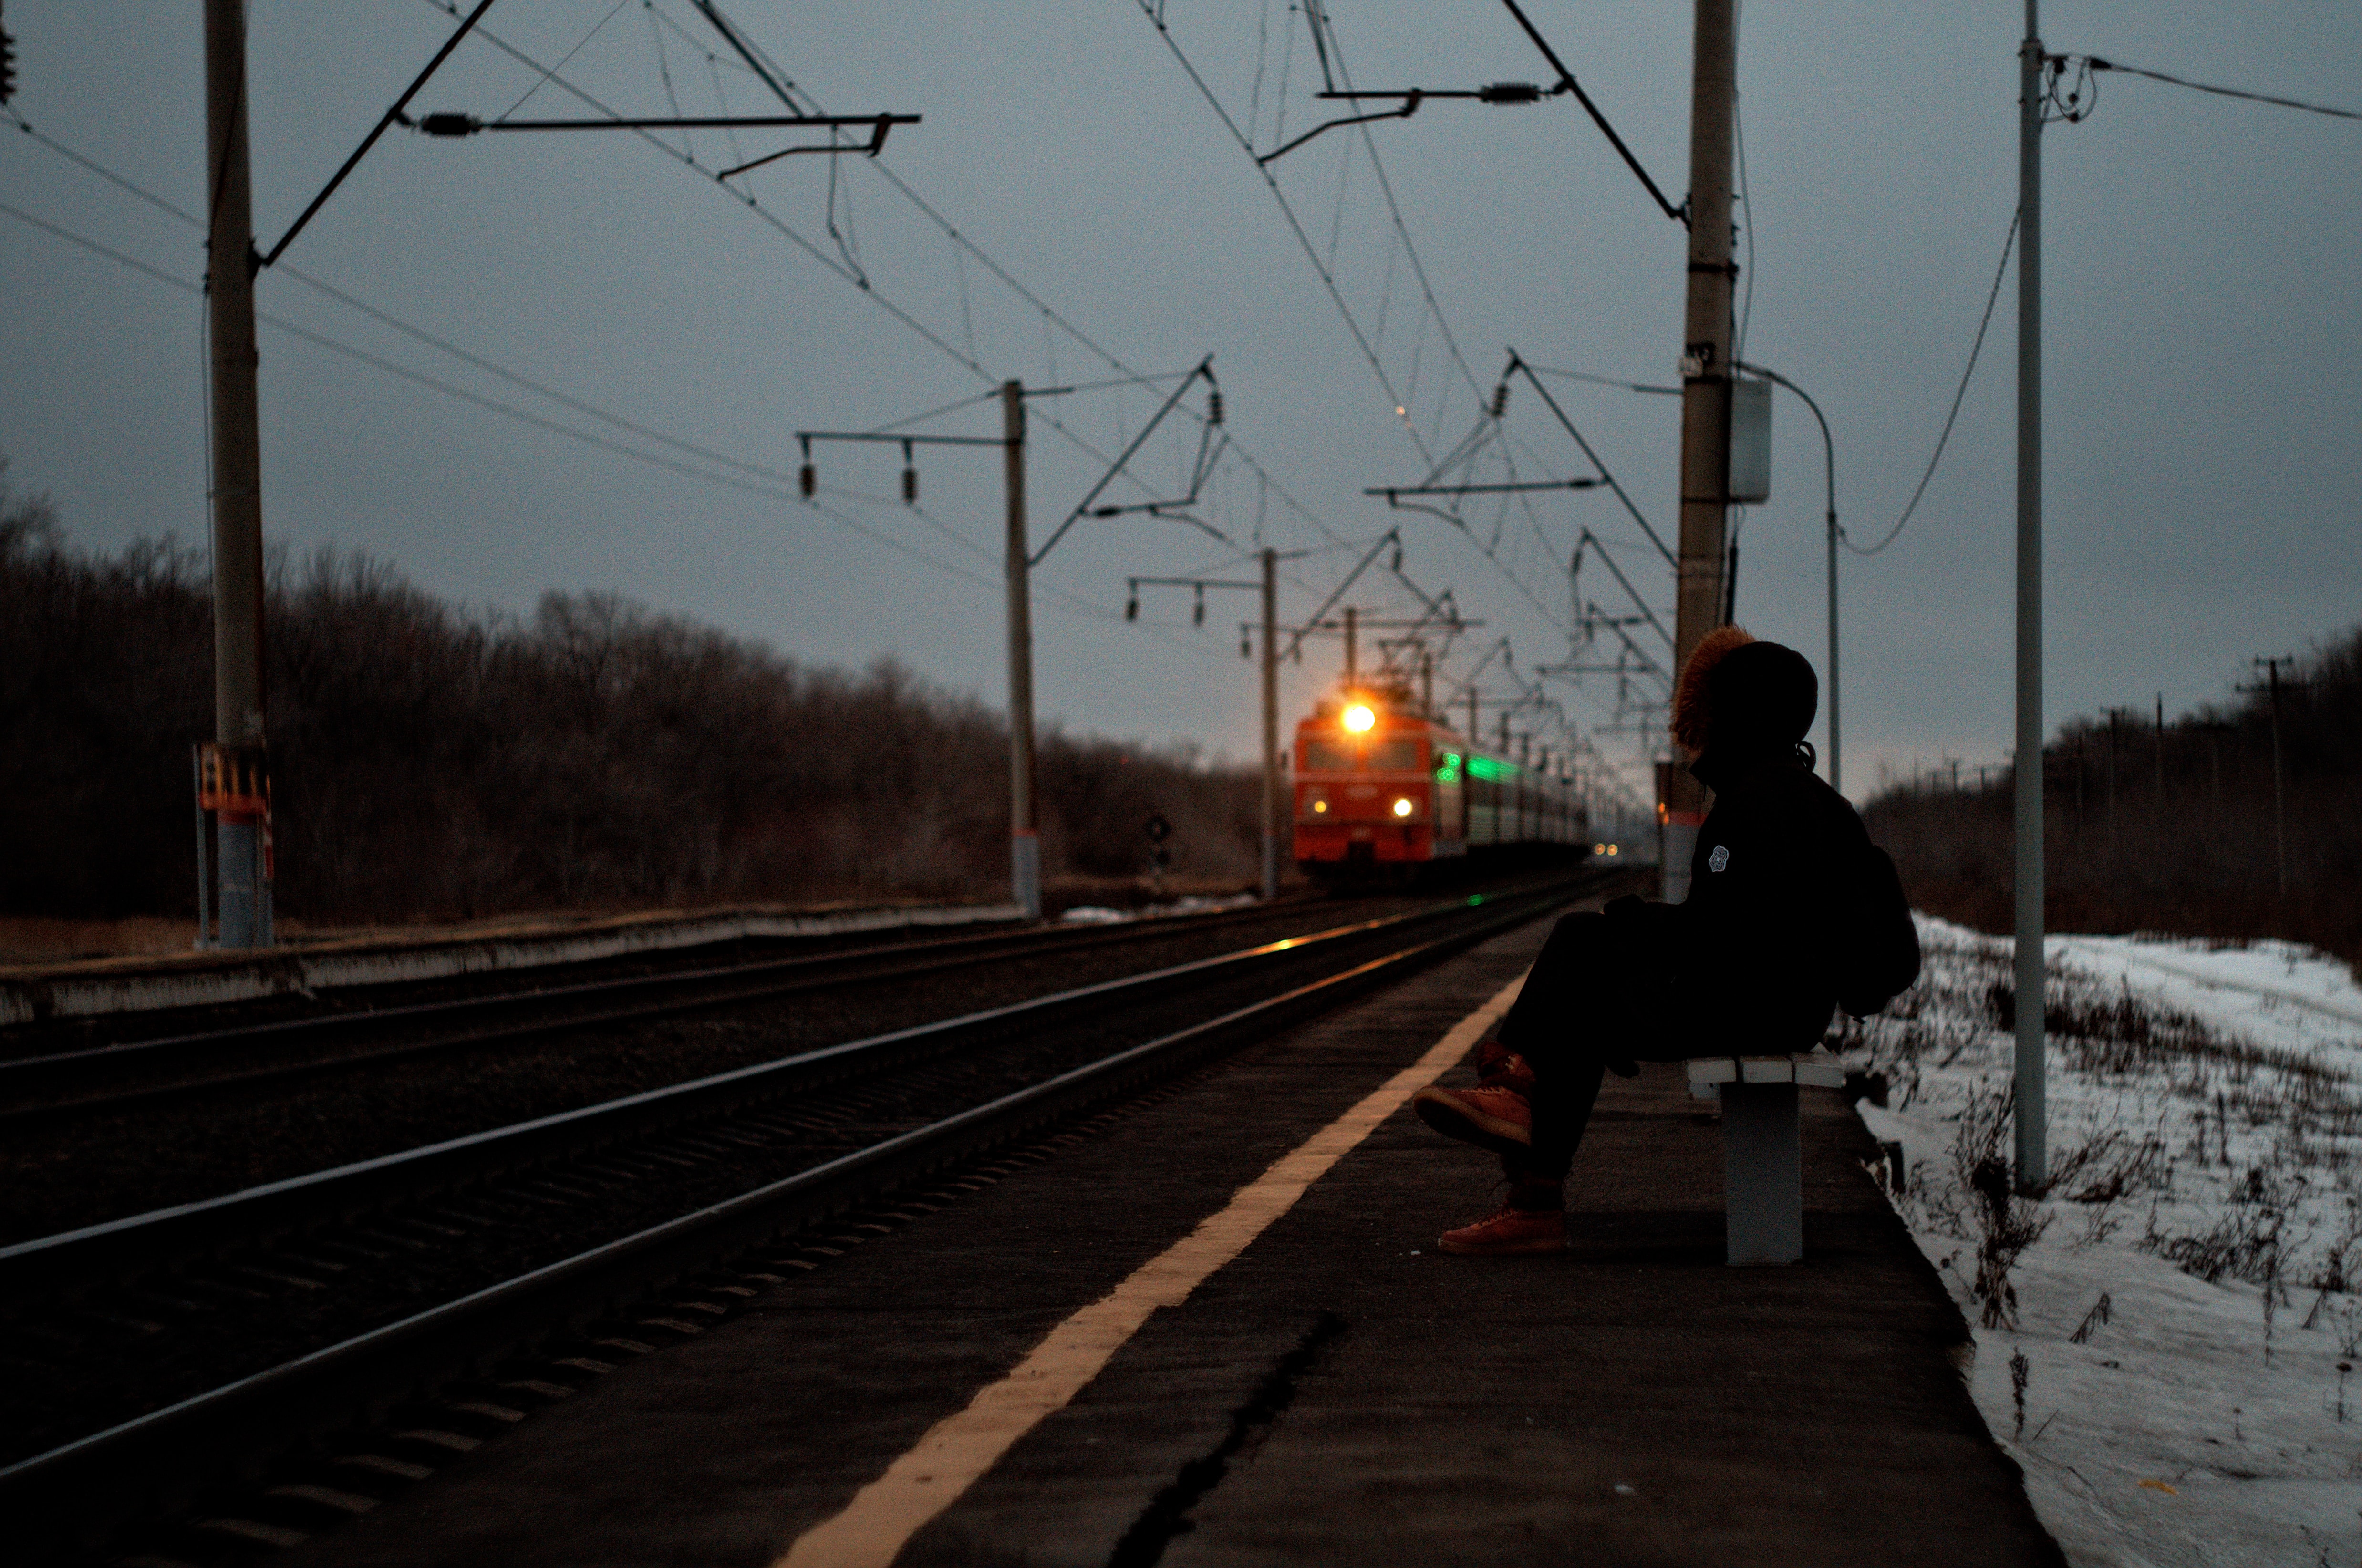 miscellanea, silhouette, miscellaneous, sadness, loneliness, station, sorrow, train